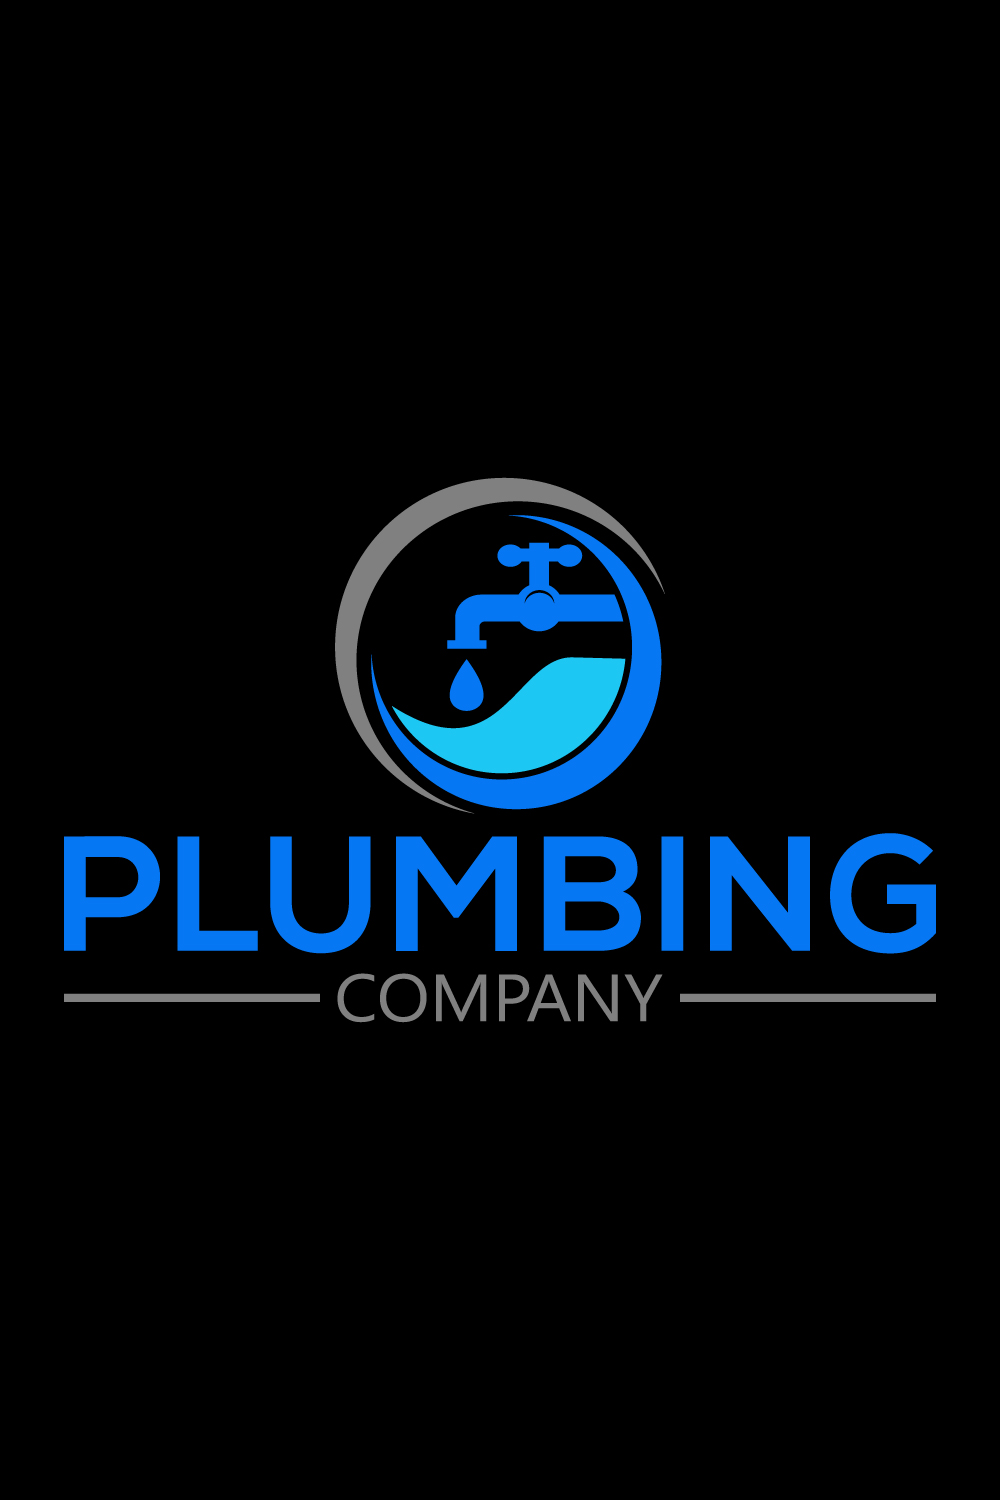 Plumbing company logo design, Vector design template pinterest preview image.